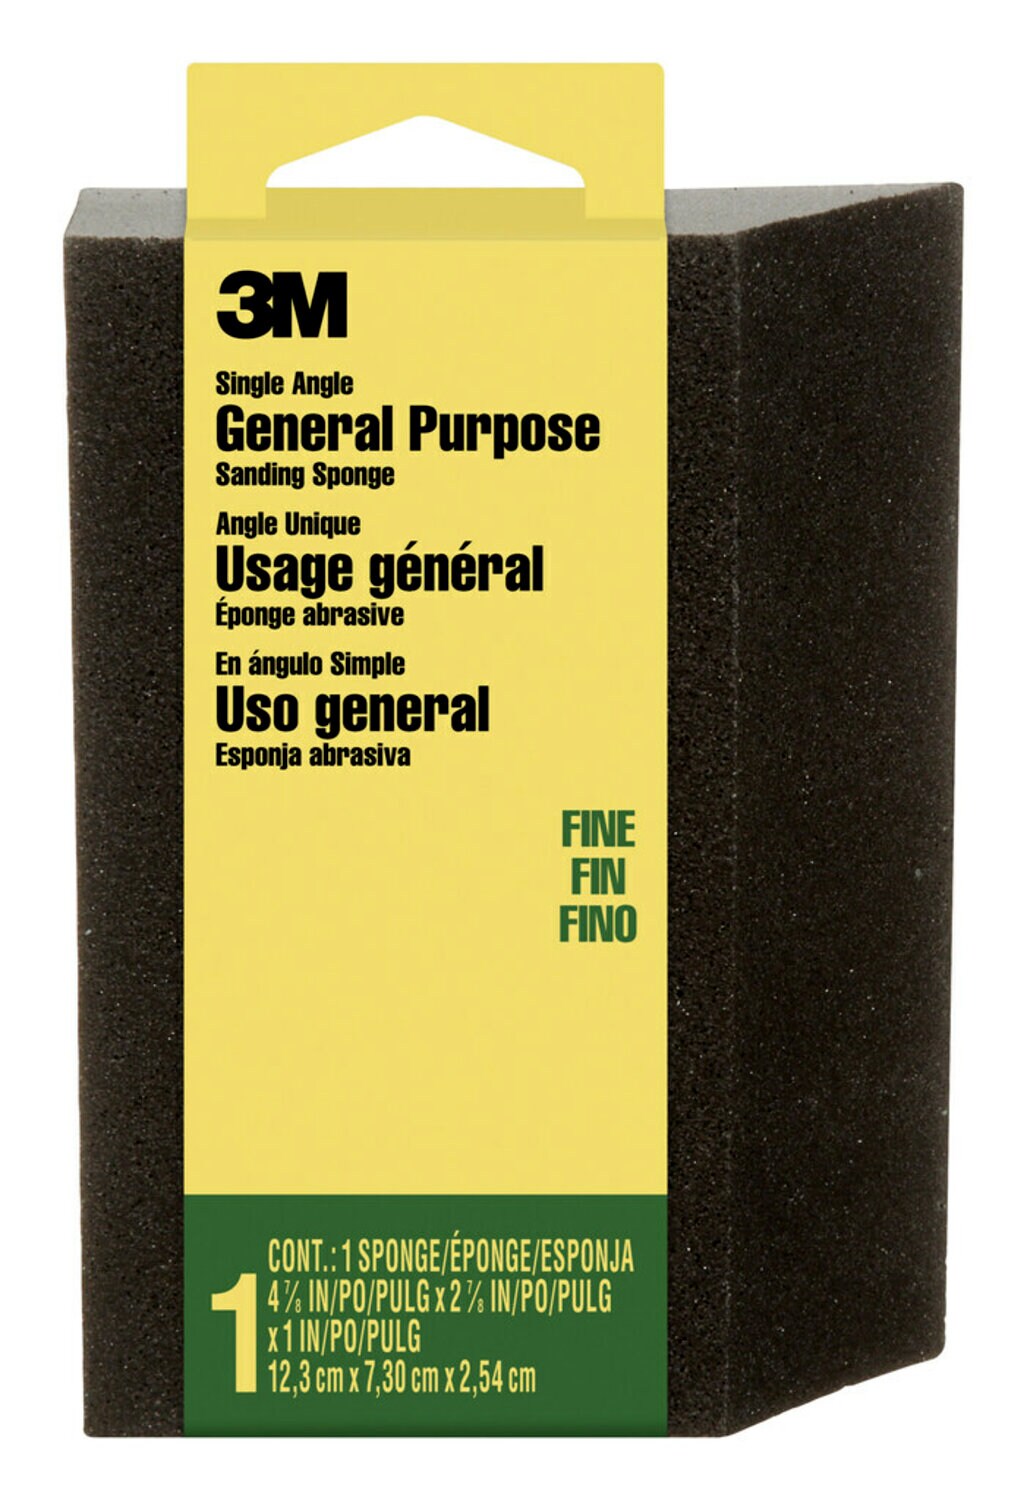 7100101245 - 3M General Purpose Sanding Sponge CP040-12-CC, Single Angle, 2 7/8 in x 4 7/8 in x 1 in, Fine, 1/pk, 12 pks/cs